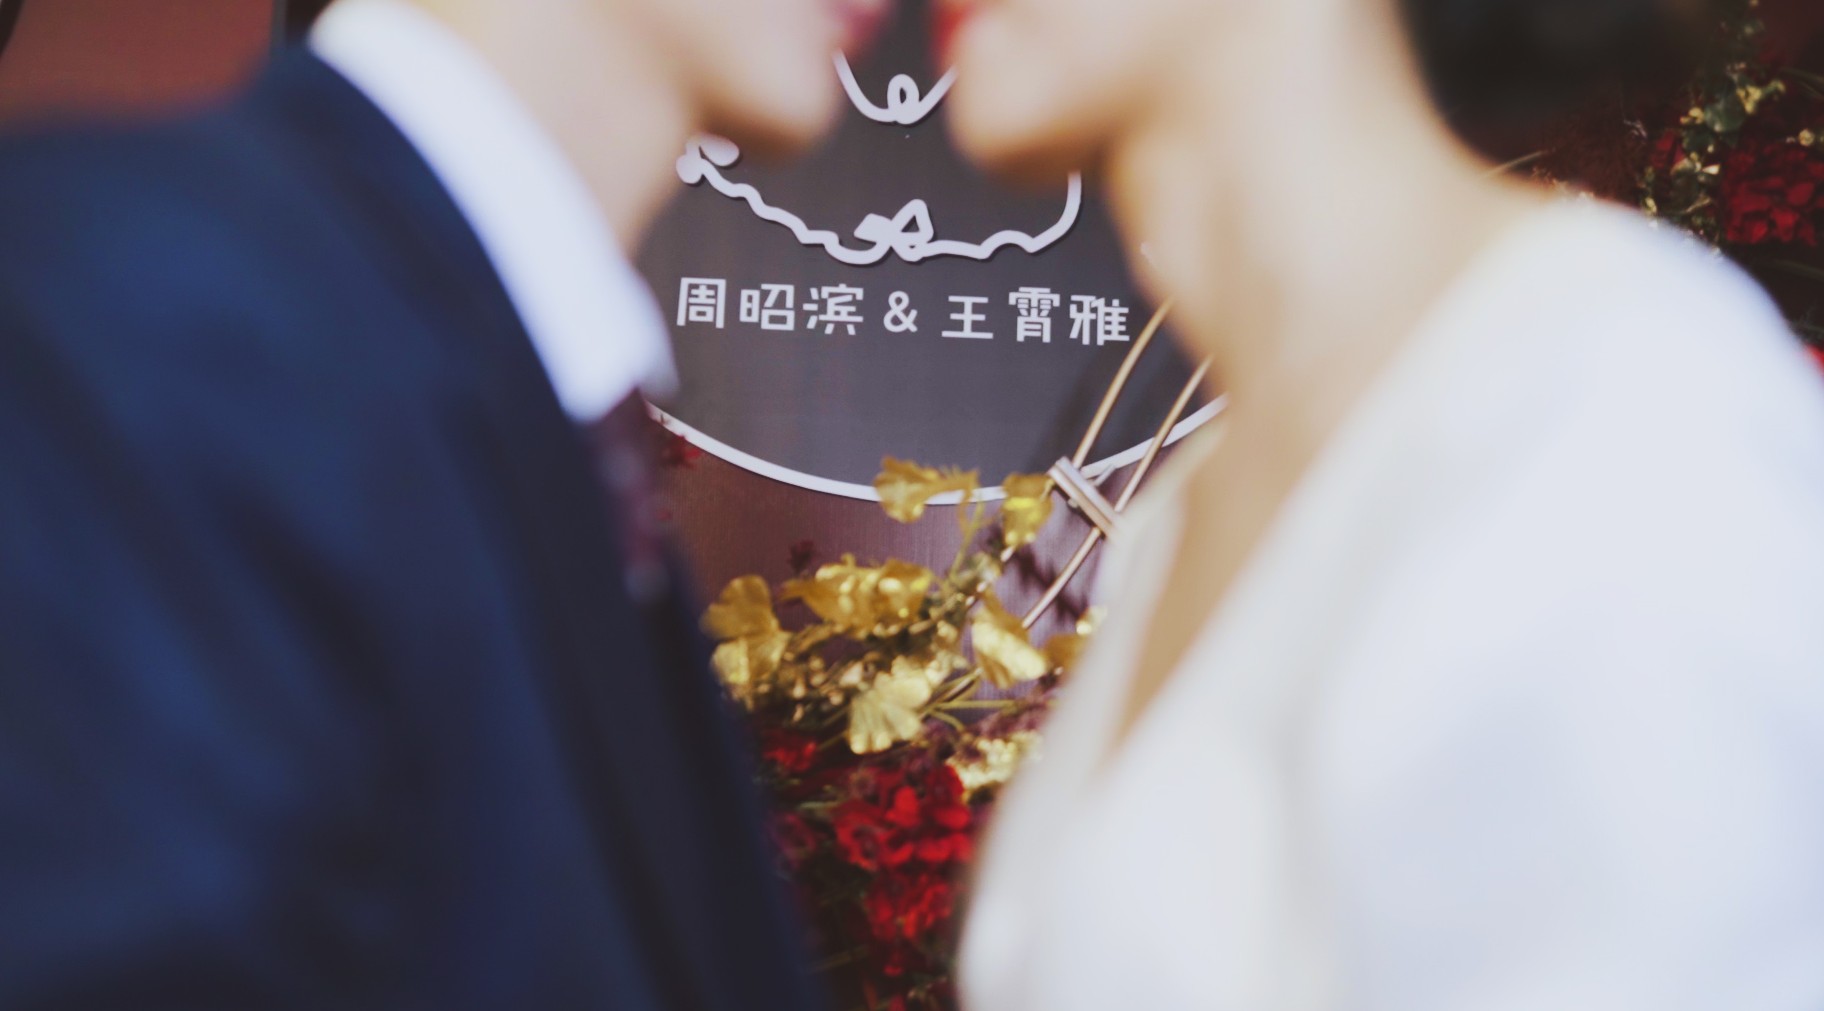 Bin + Ya | Jan 16 2020 婚礼短片 